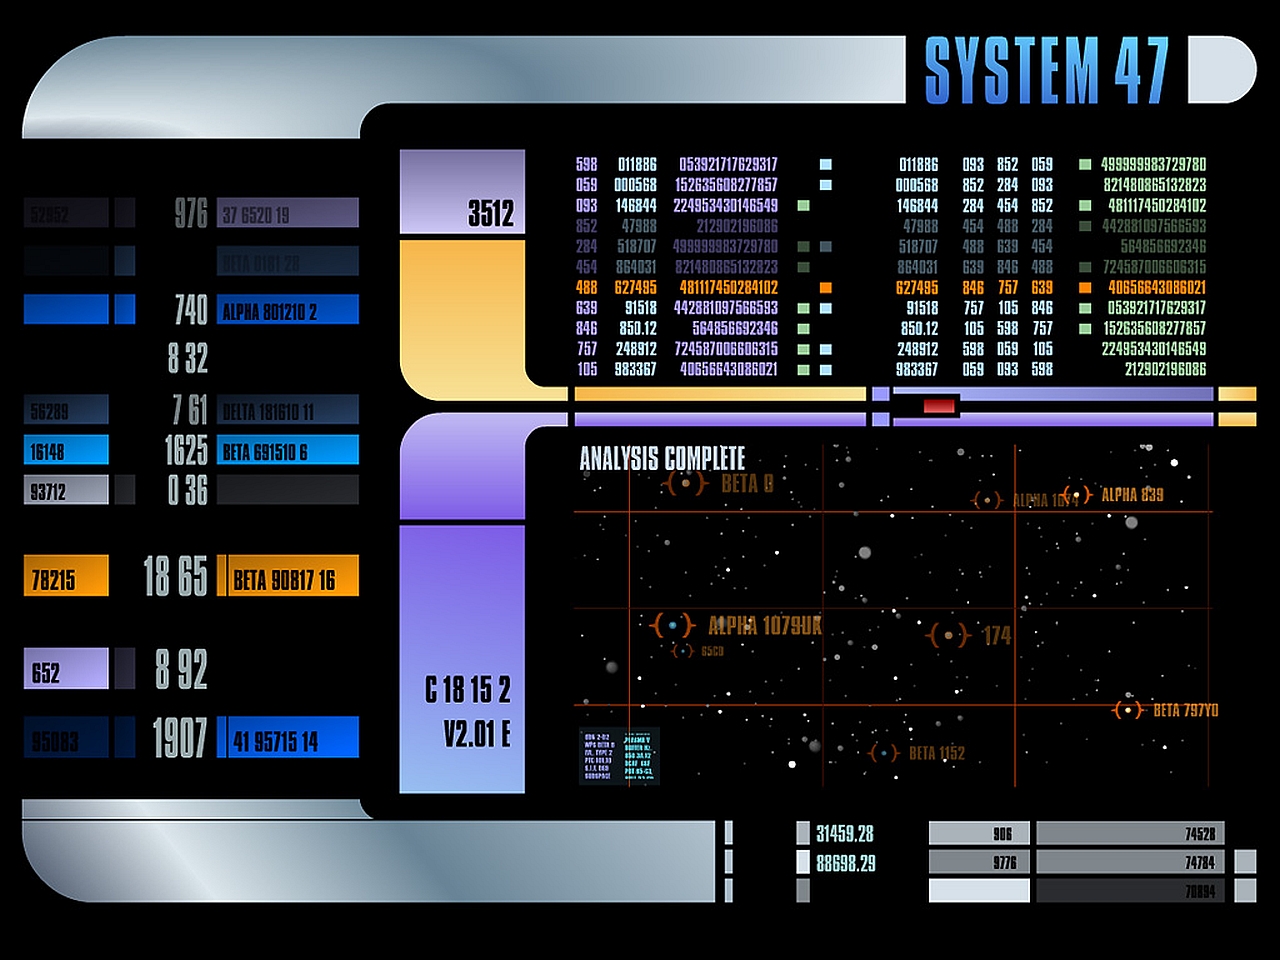 Star Trek Puter Wallpaper Desktop Background Id